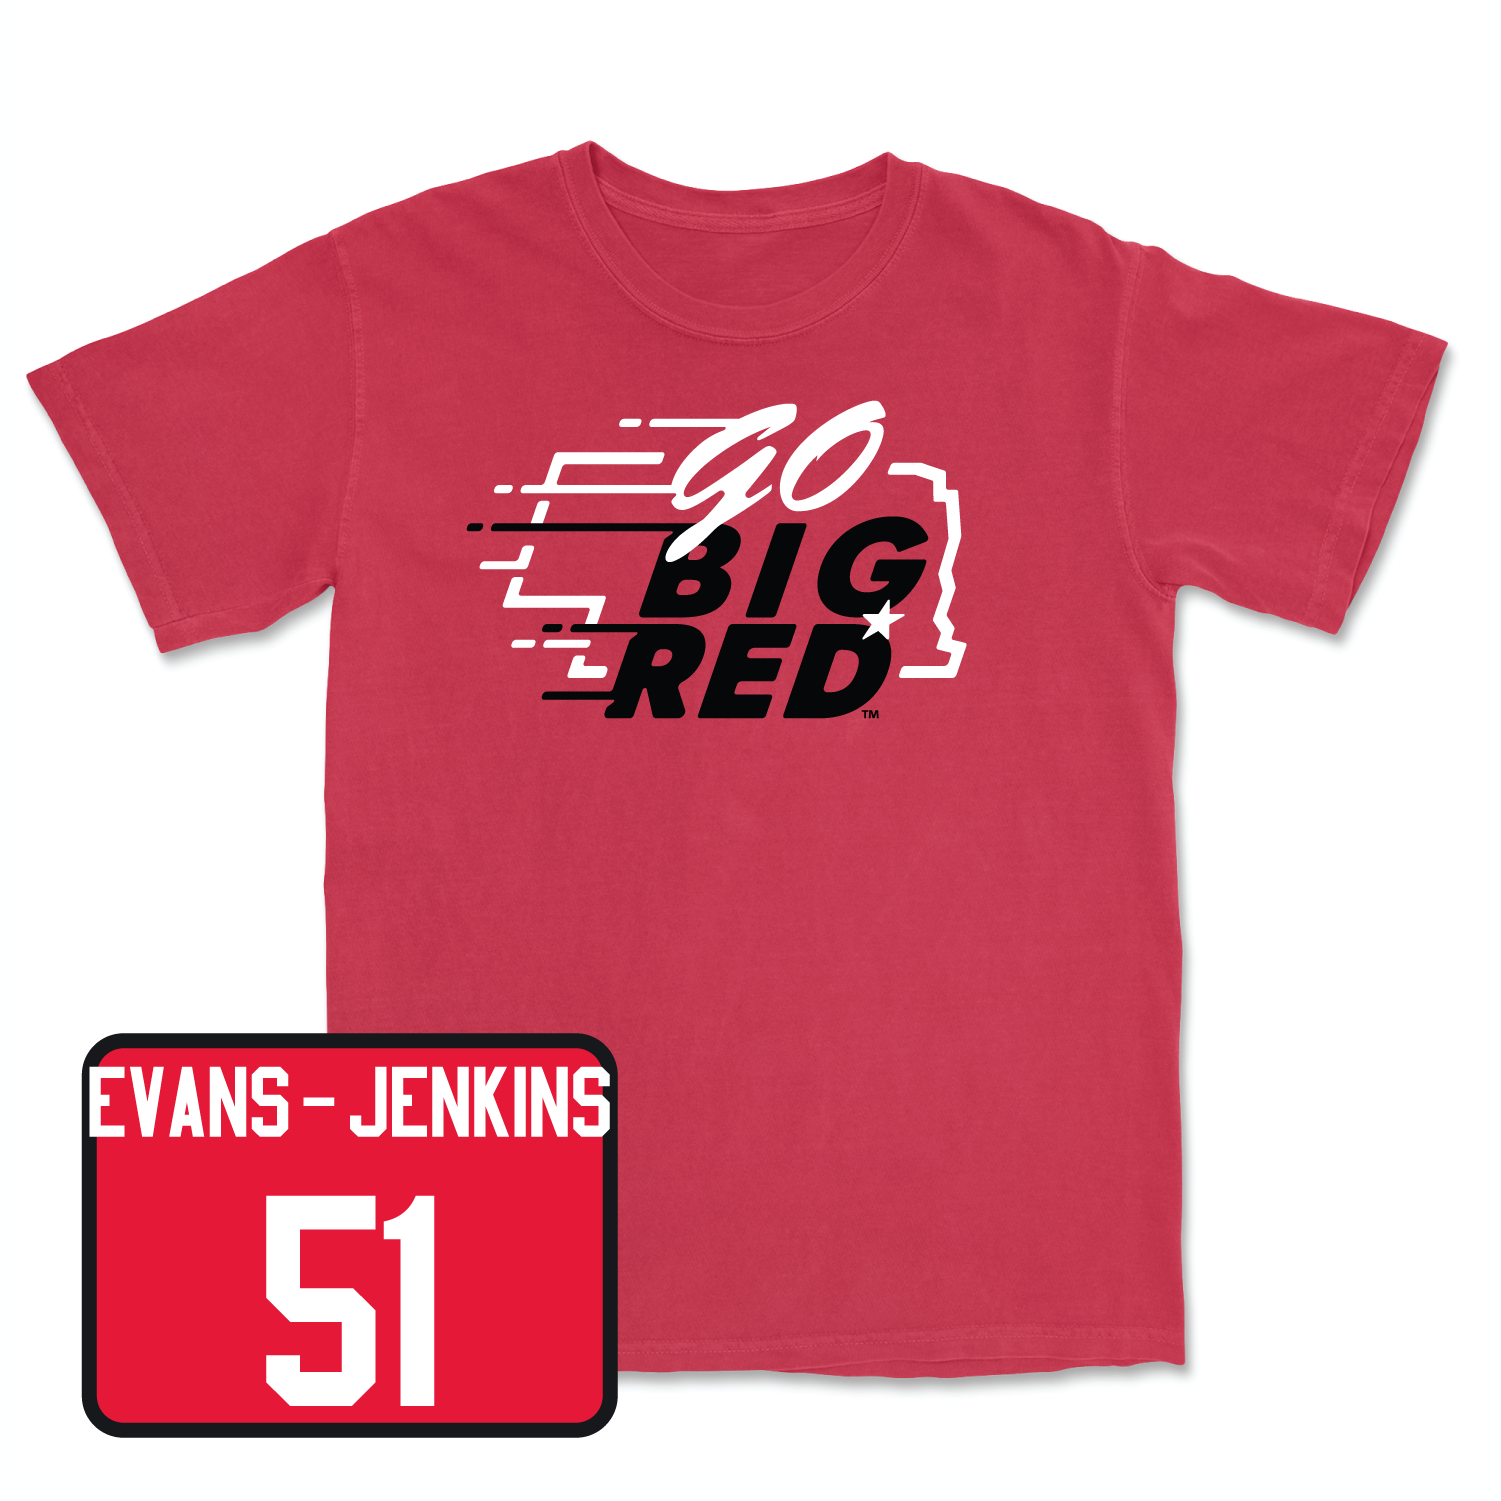 Red Football GBR Tee 6 2X-Large / Justin Evans-Jenkins | #51